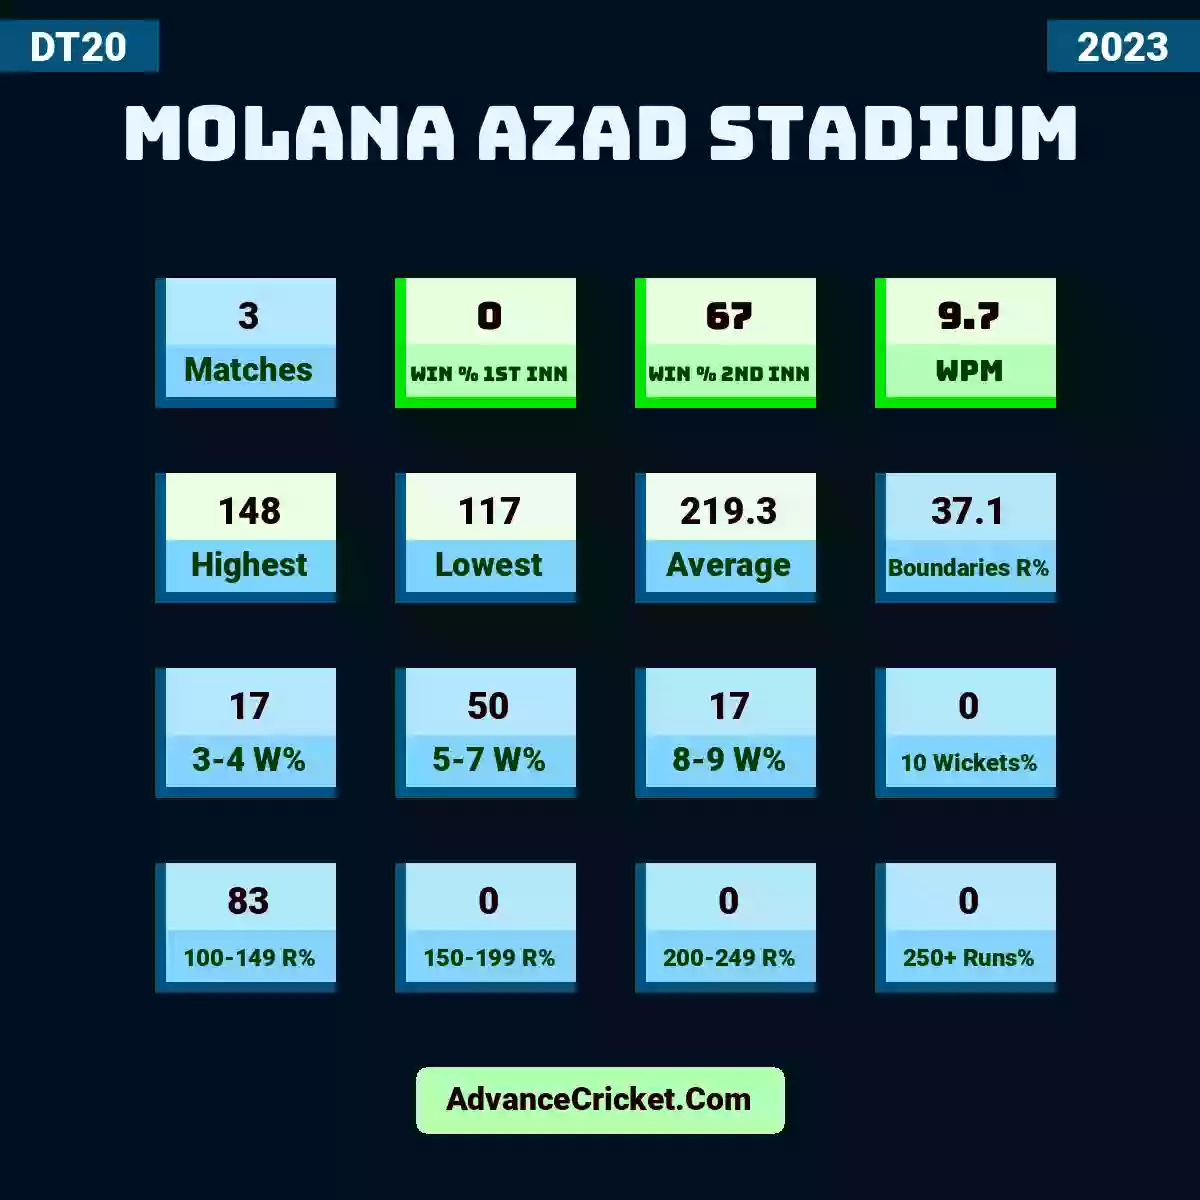 Image showing Molana Azad Stadium with Matches: 3, Win % 1st Inn: 0, Win % 2nd Inn: 67, WPM: 9.7, Highest: 148, Lowest: 117, Average: 219.3, Boundaries R%: 37.1, 3-4 W%: 17, 5-7 W%: 50, 8-9 W%: 17, 10 Wickets%: 0, 100-149 R%: 83, 150-199 R%: 0, 200-249 R%: 0, 250+ Runs%: 0.